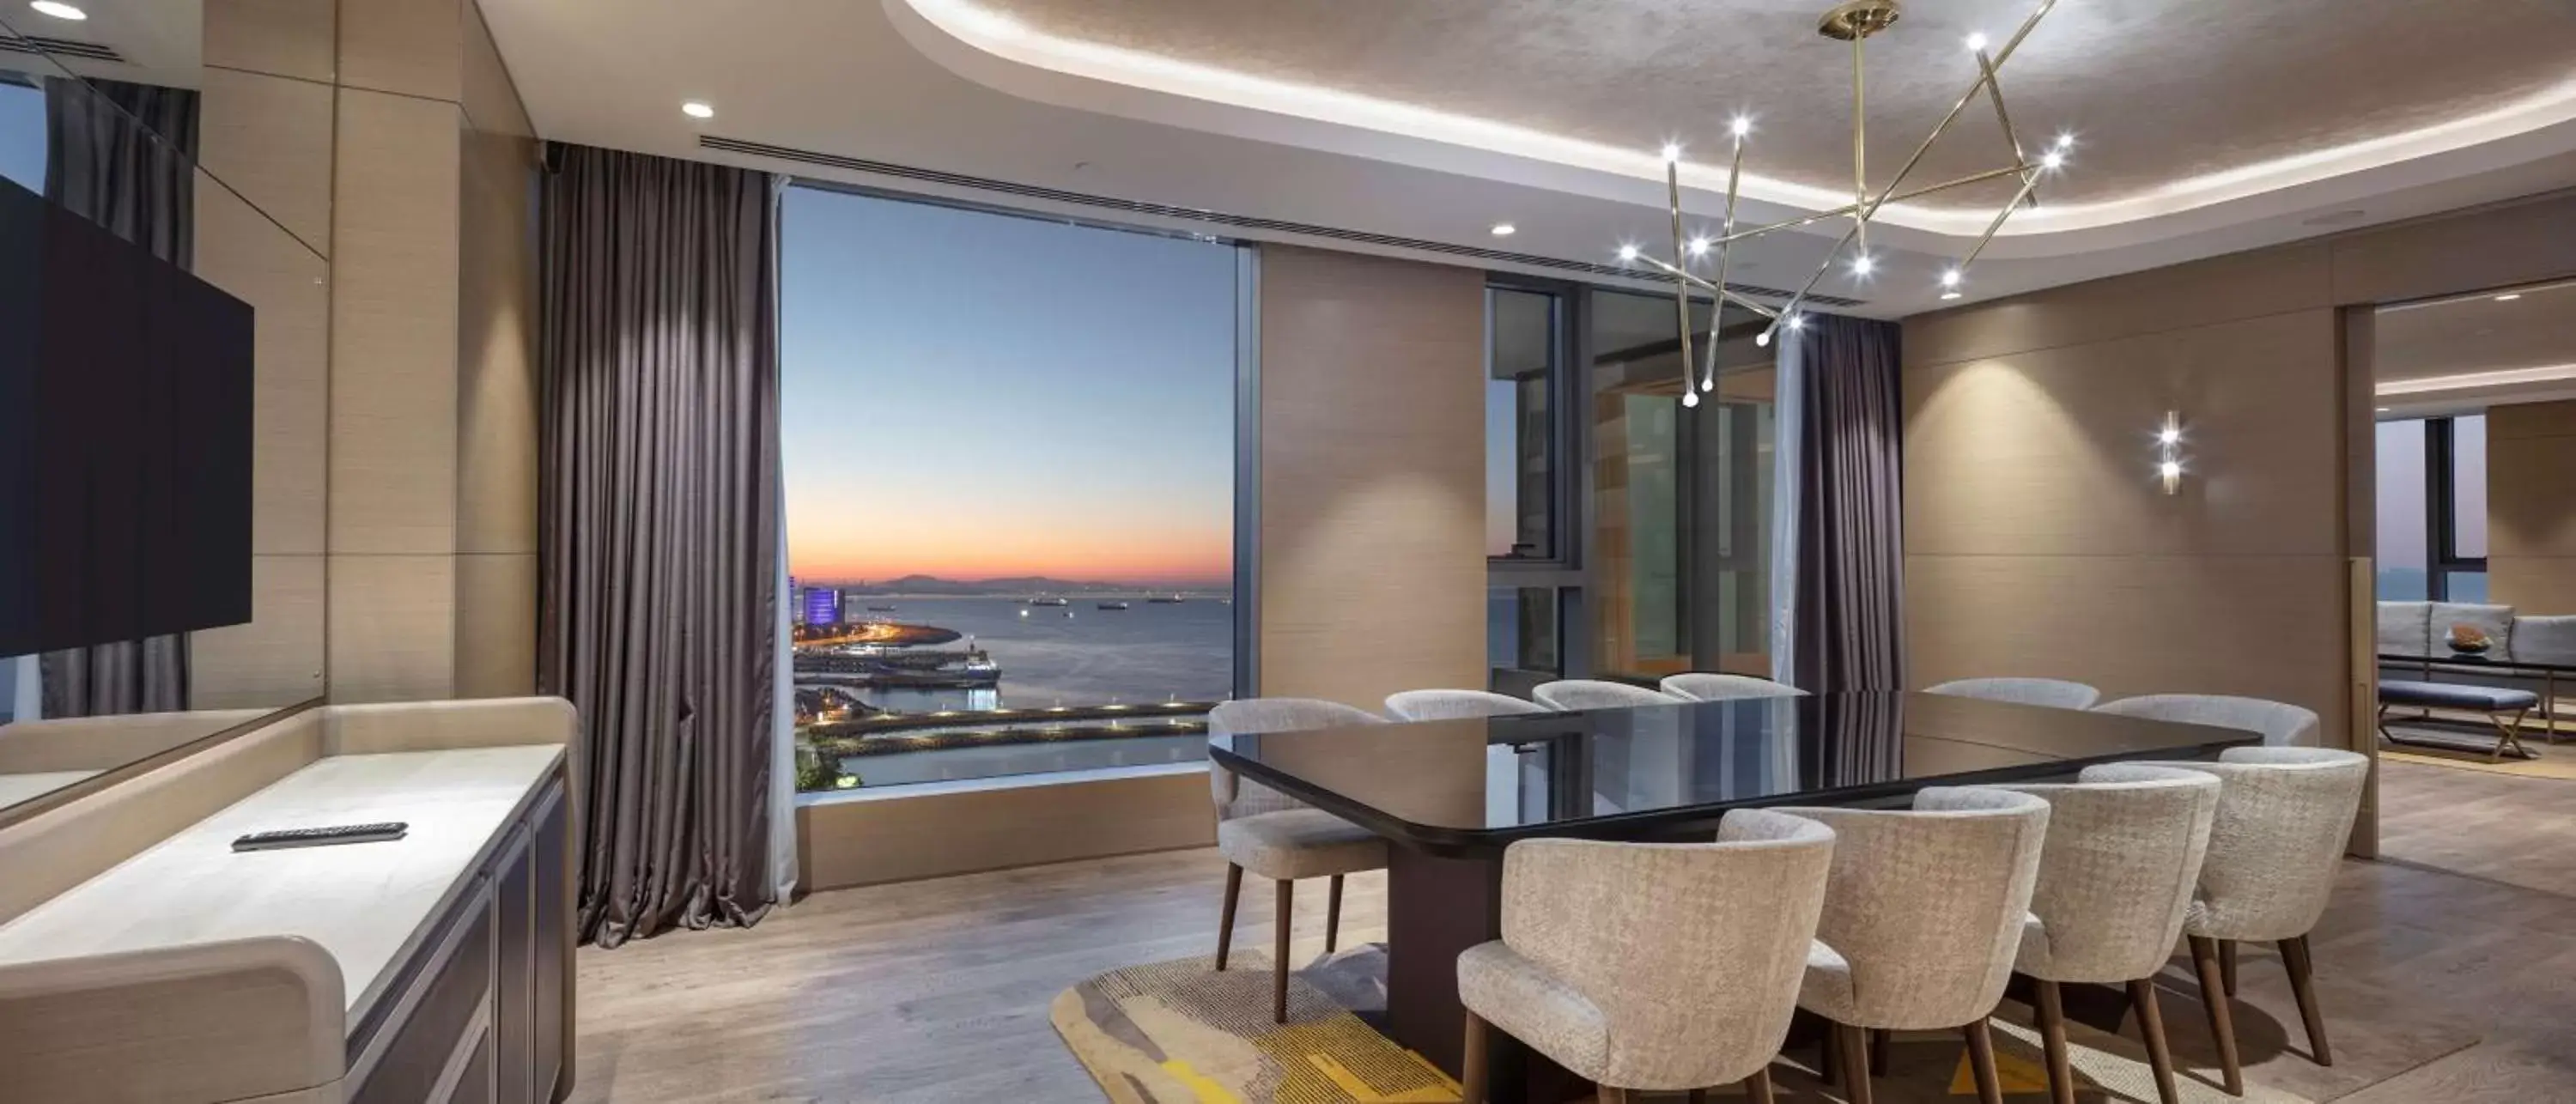 Living room in Hilton Istanbul Bakirkoy